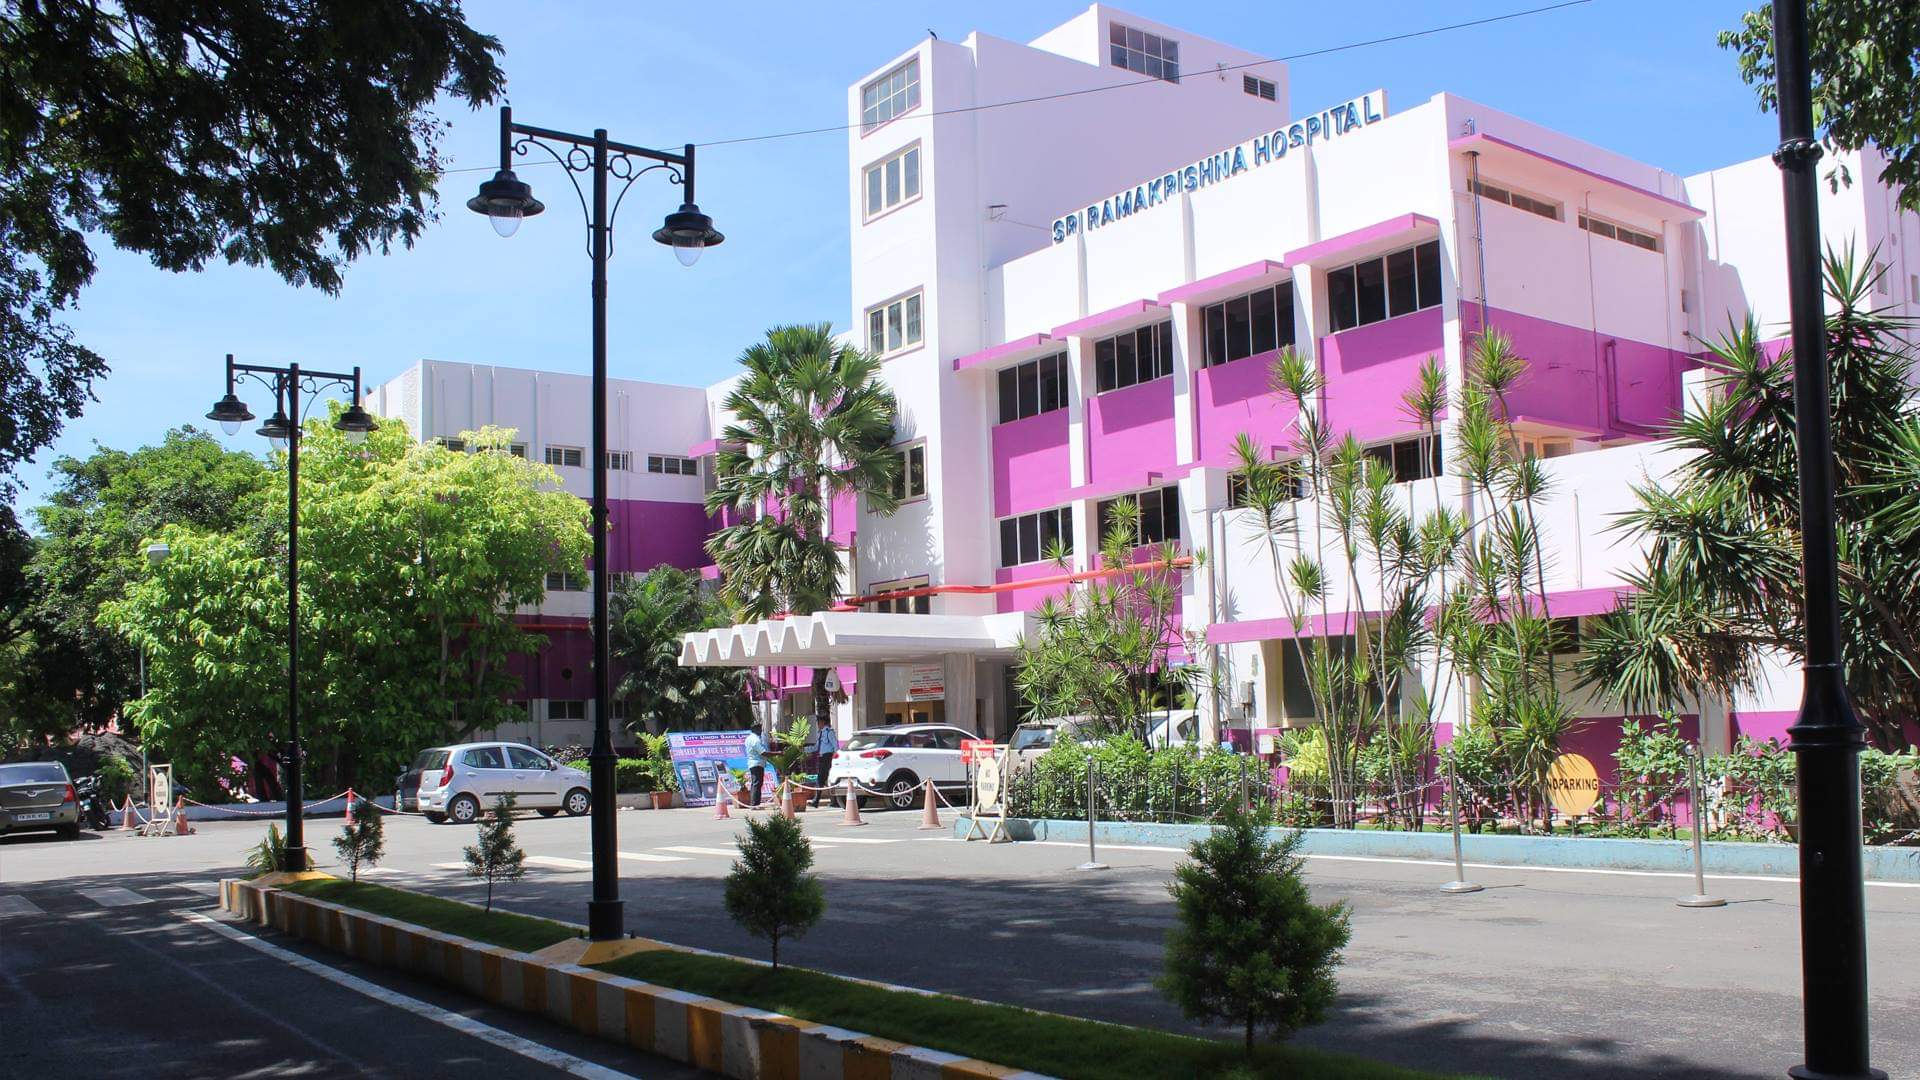 Sri Ramakrishna Hospital